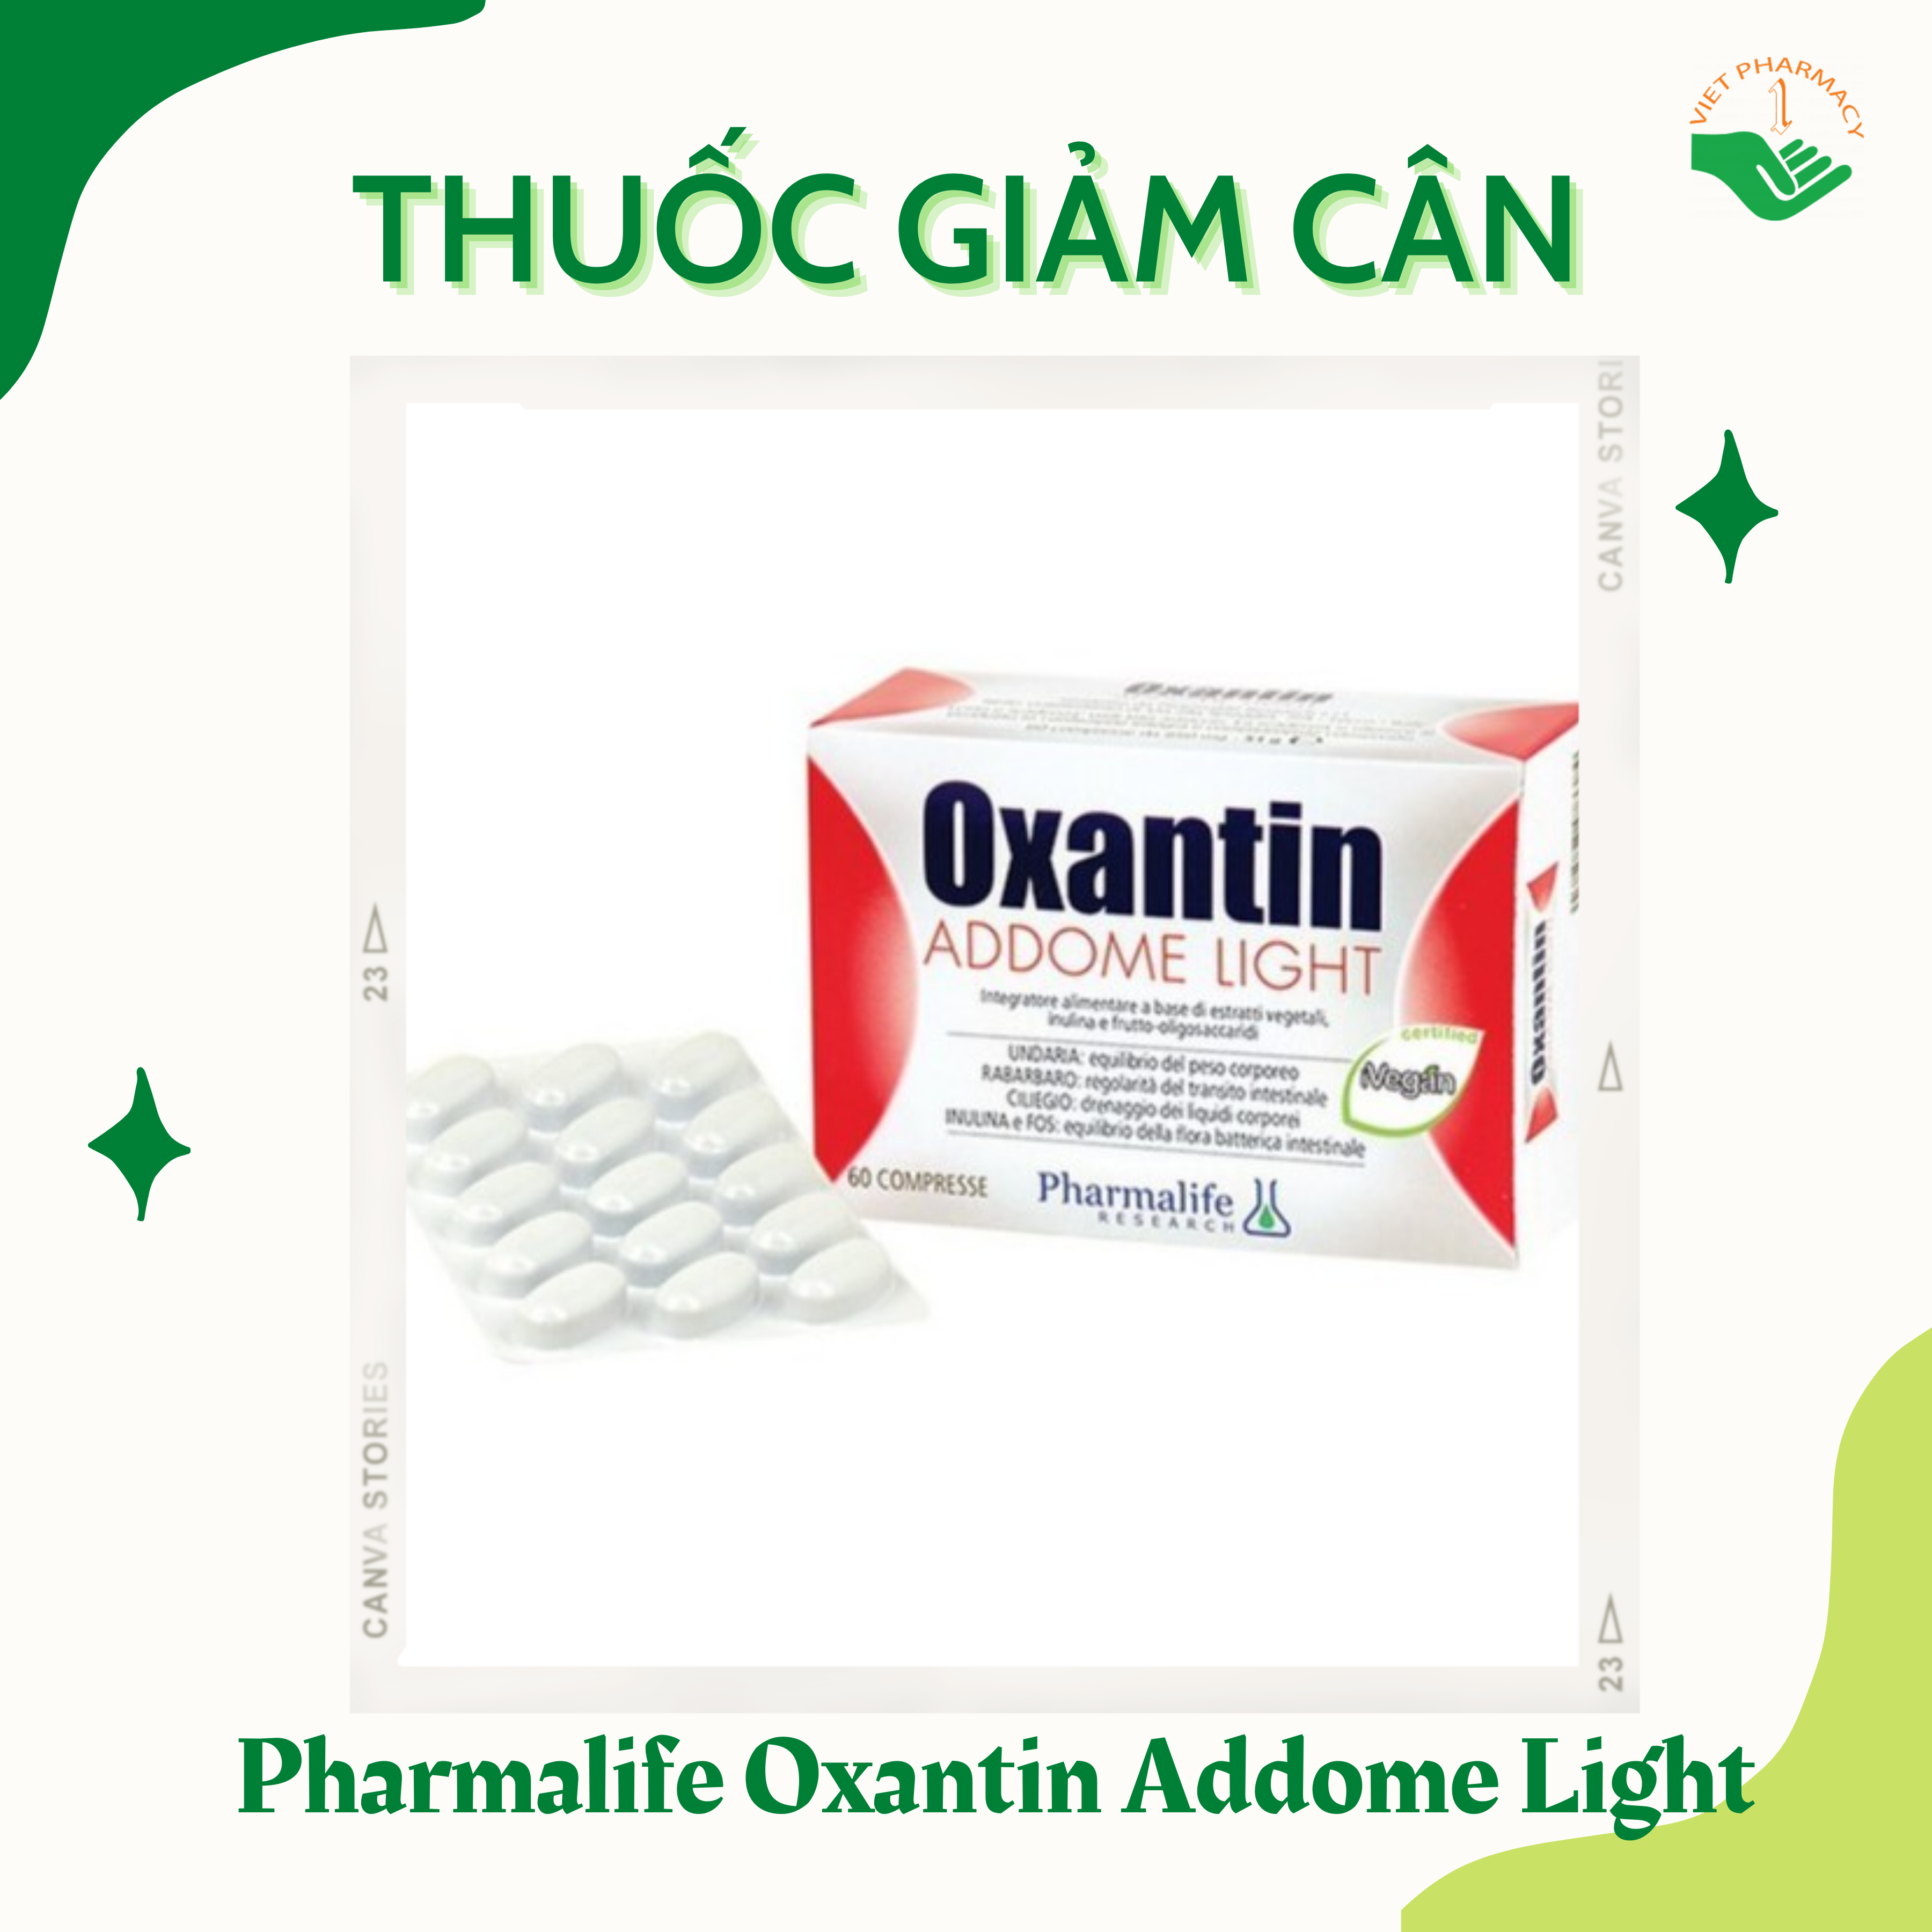 Pharmalife Oxantin Addome Light